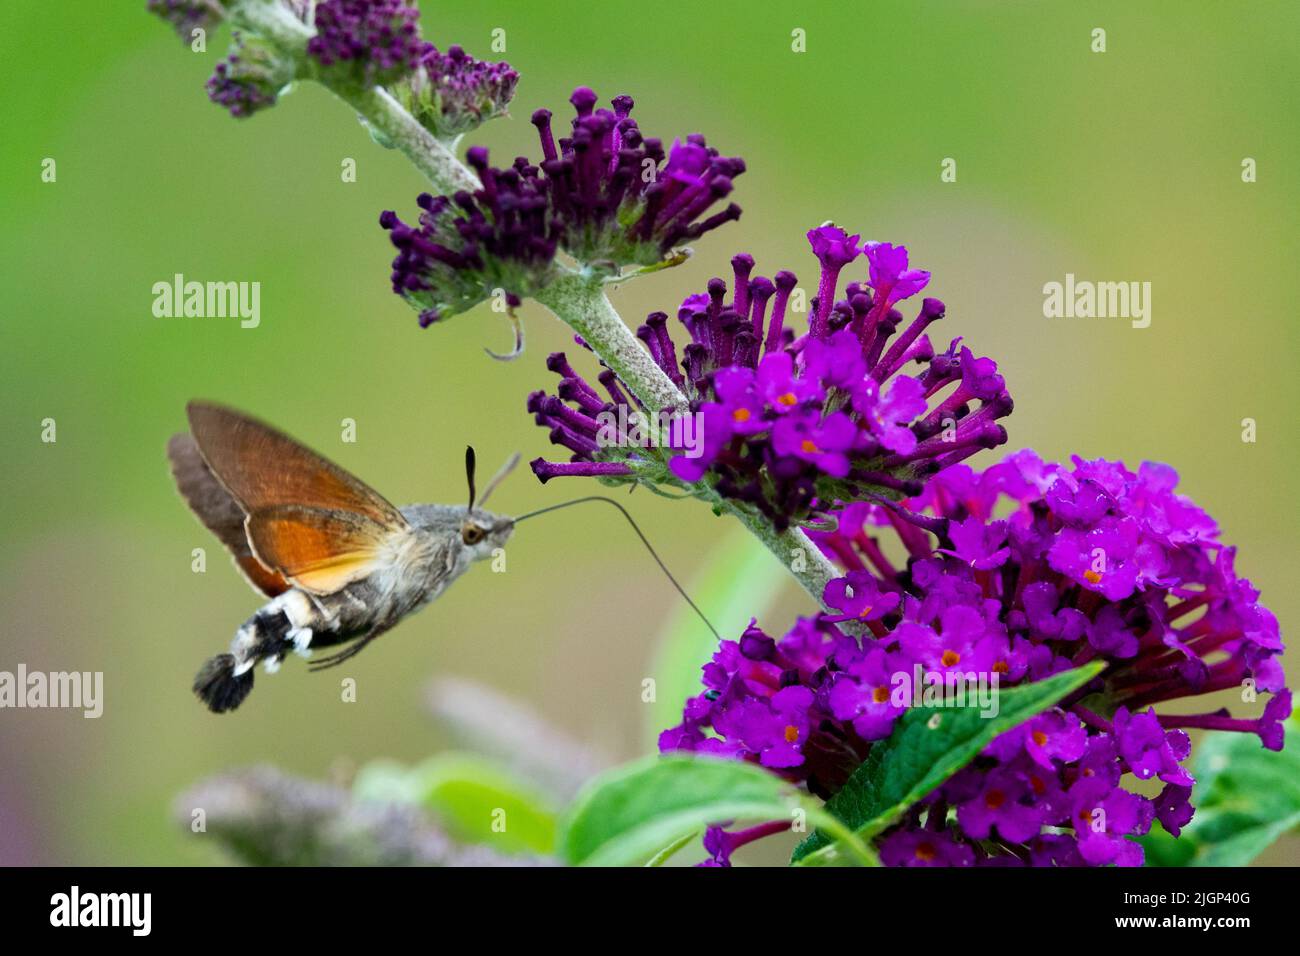 Kolibri-Falkenmotte Macroglossum stellatarum Nectaring auf Buddleja Blume Schmetterling saugenden Nektarbestäuber Buddleia davidii Buddleja davidii Buzz Stockfoto